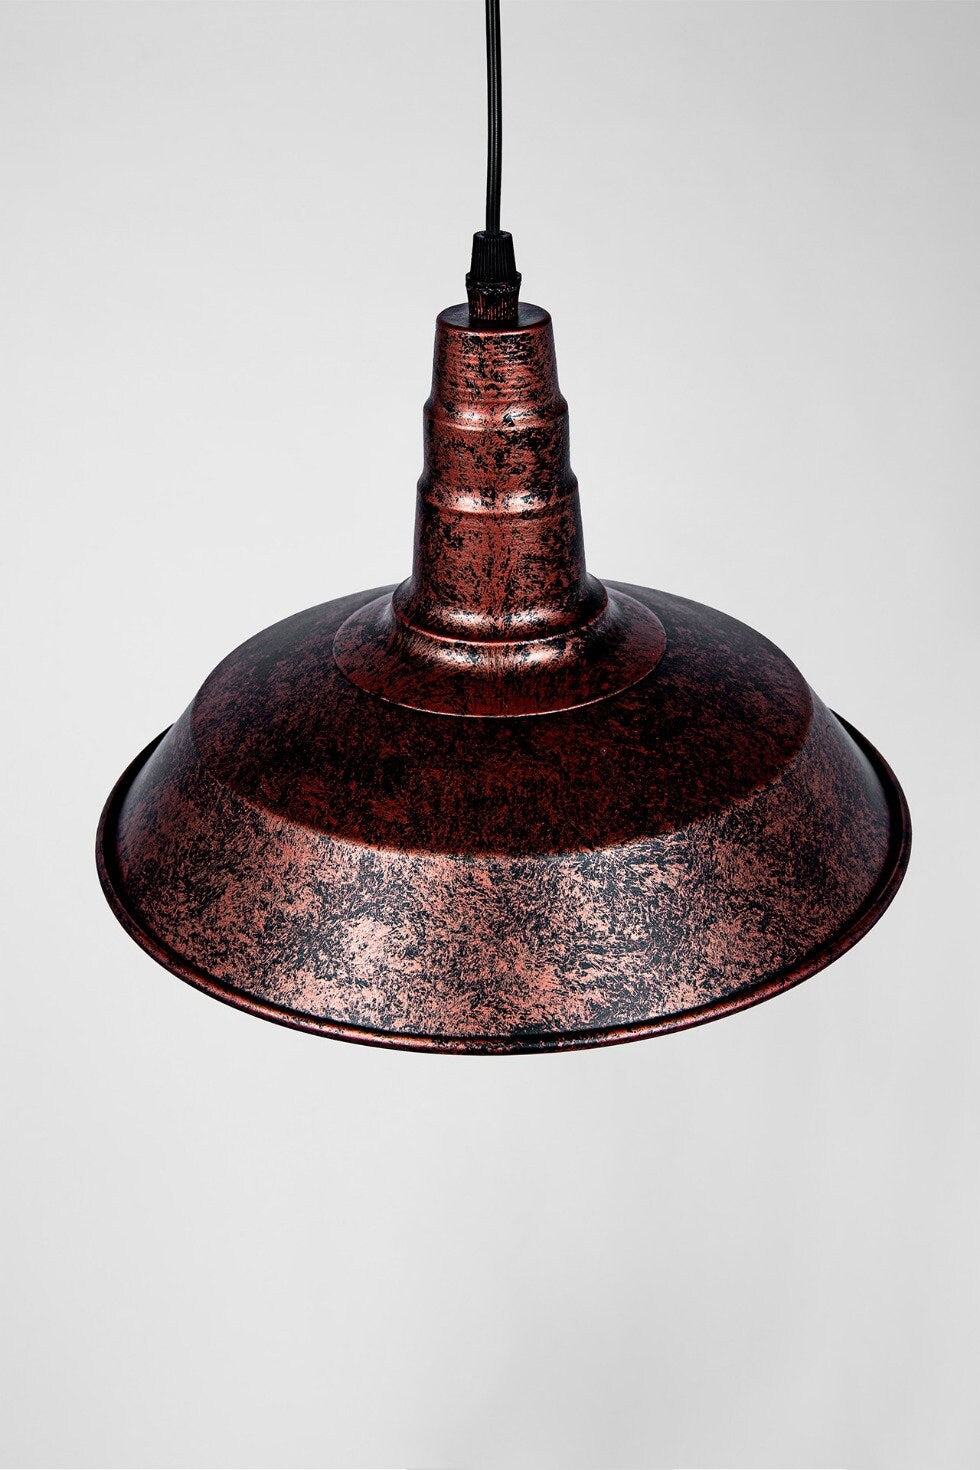 Mitchell - Retro Vintage Industrial Design Metal Pendant Lamp